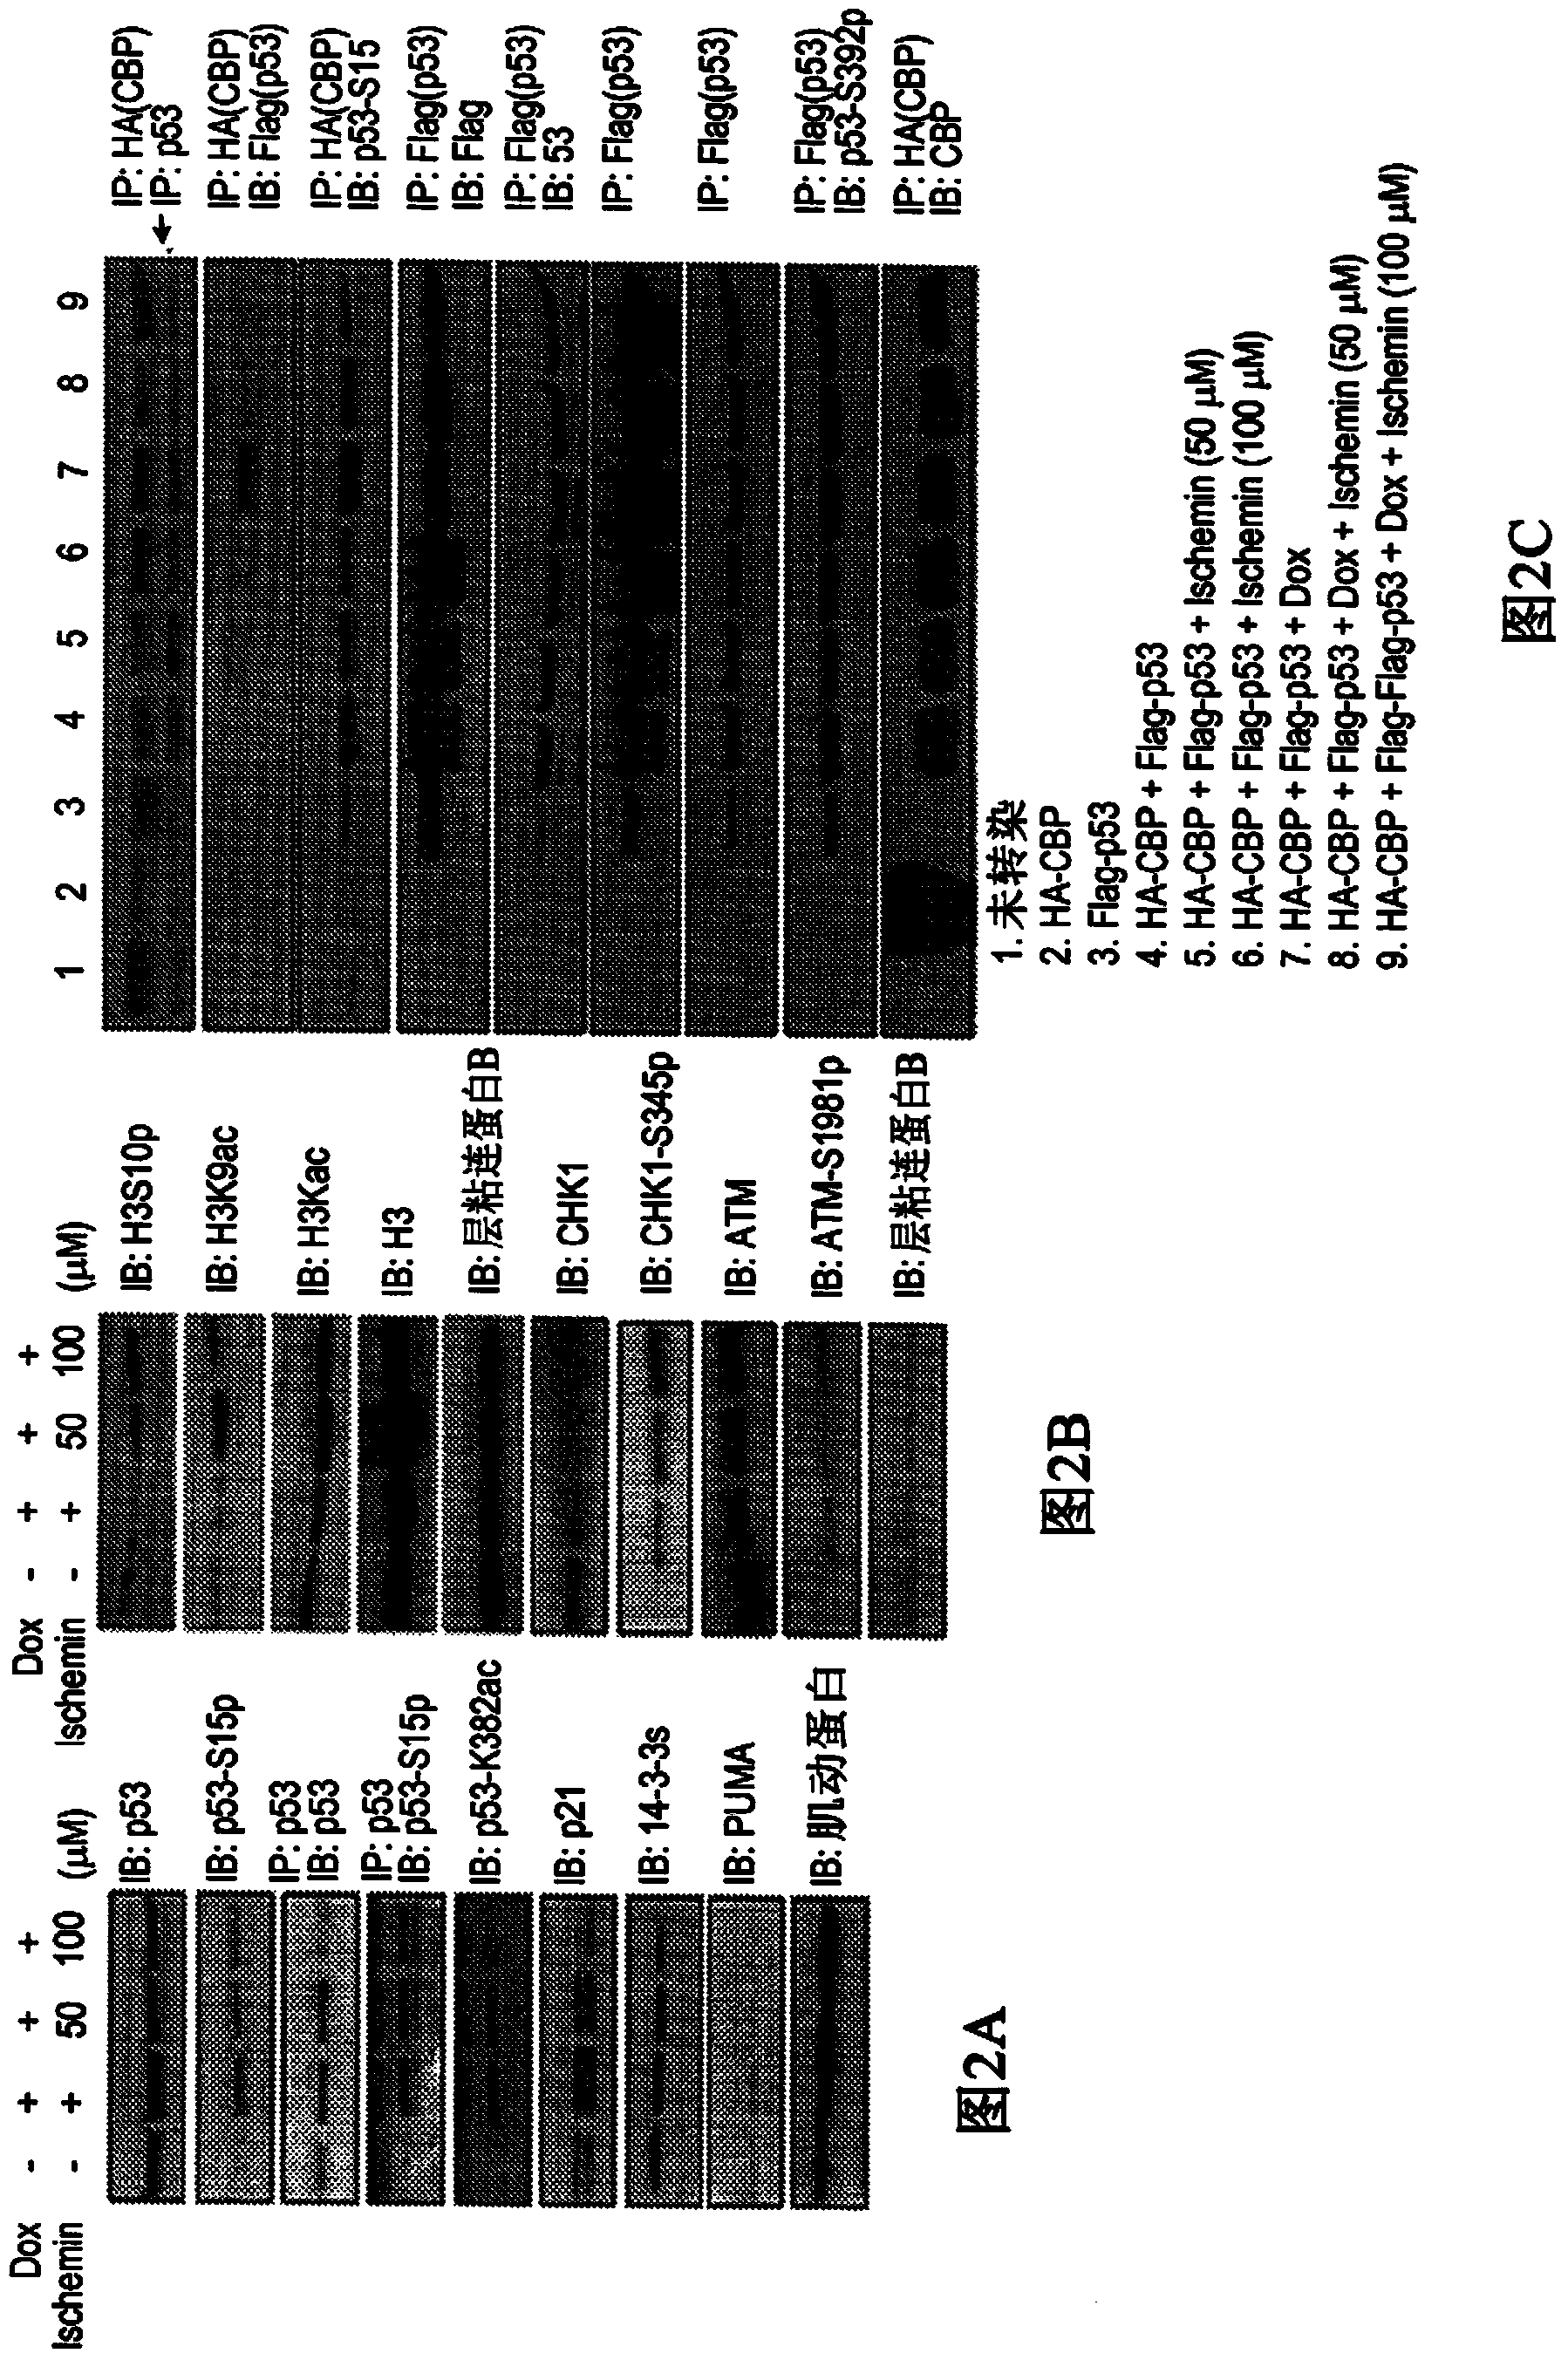 Inhibitors of bromodomains as modulators of gene expression